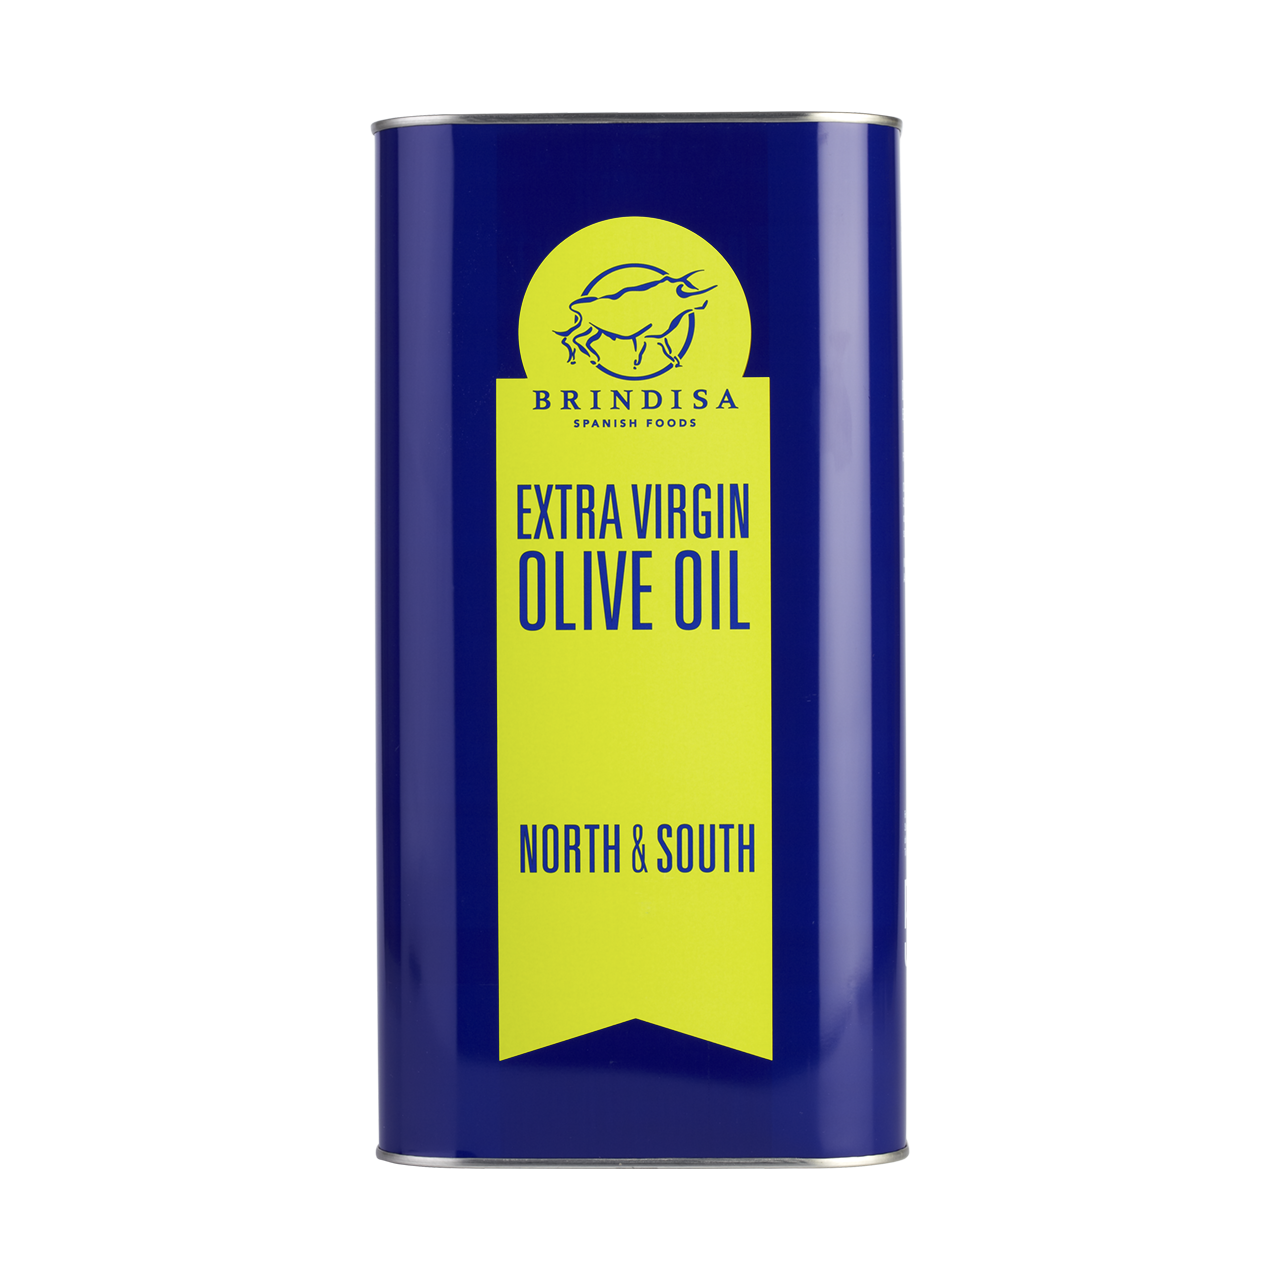 Brindisa North & South Olive Oil